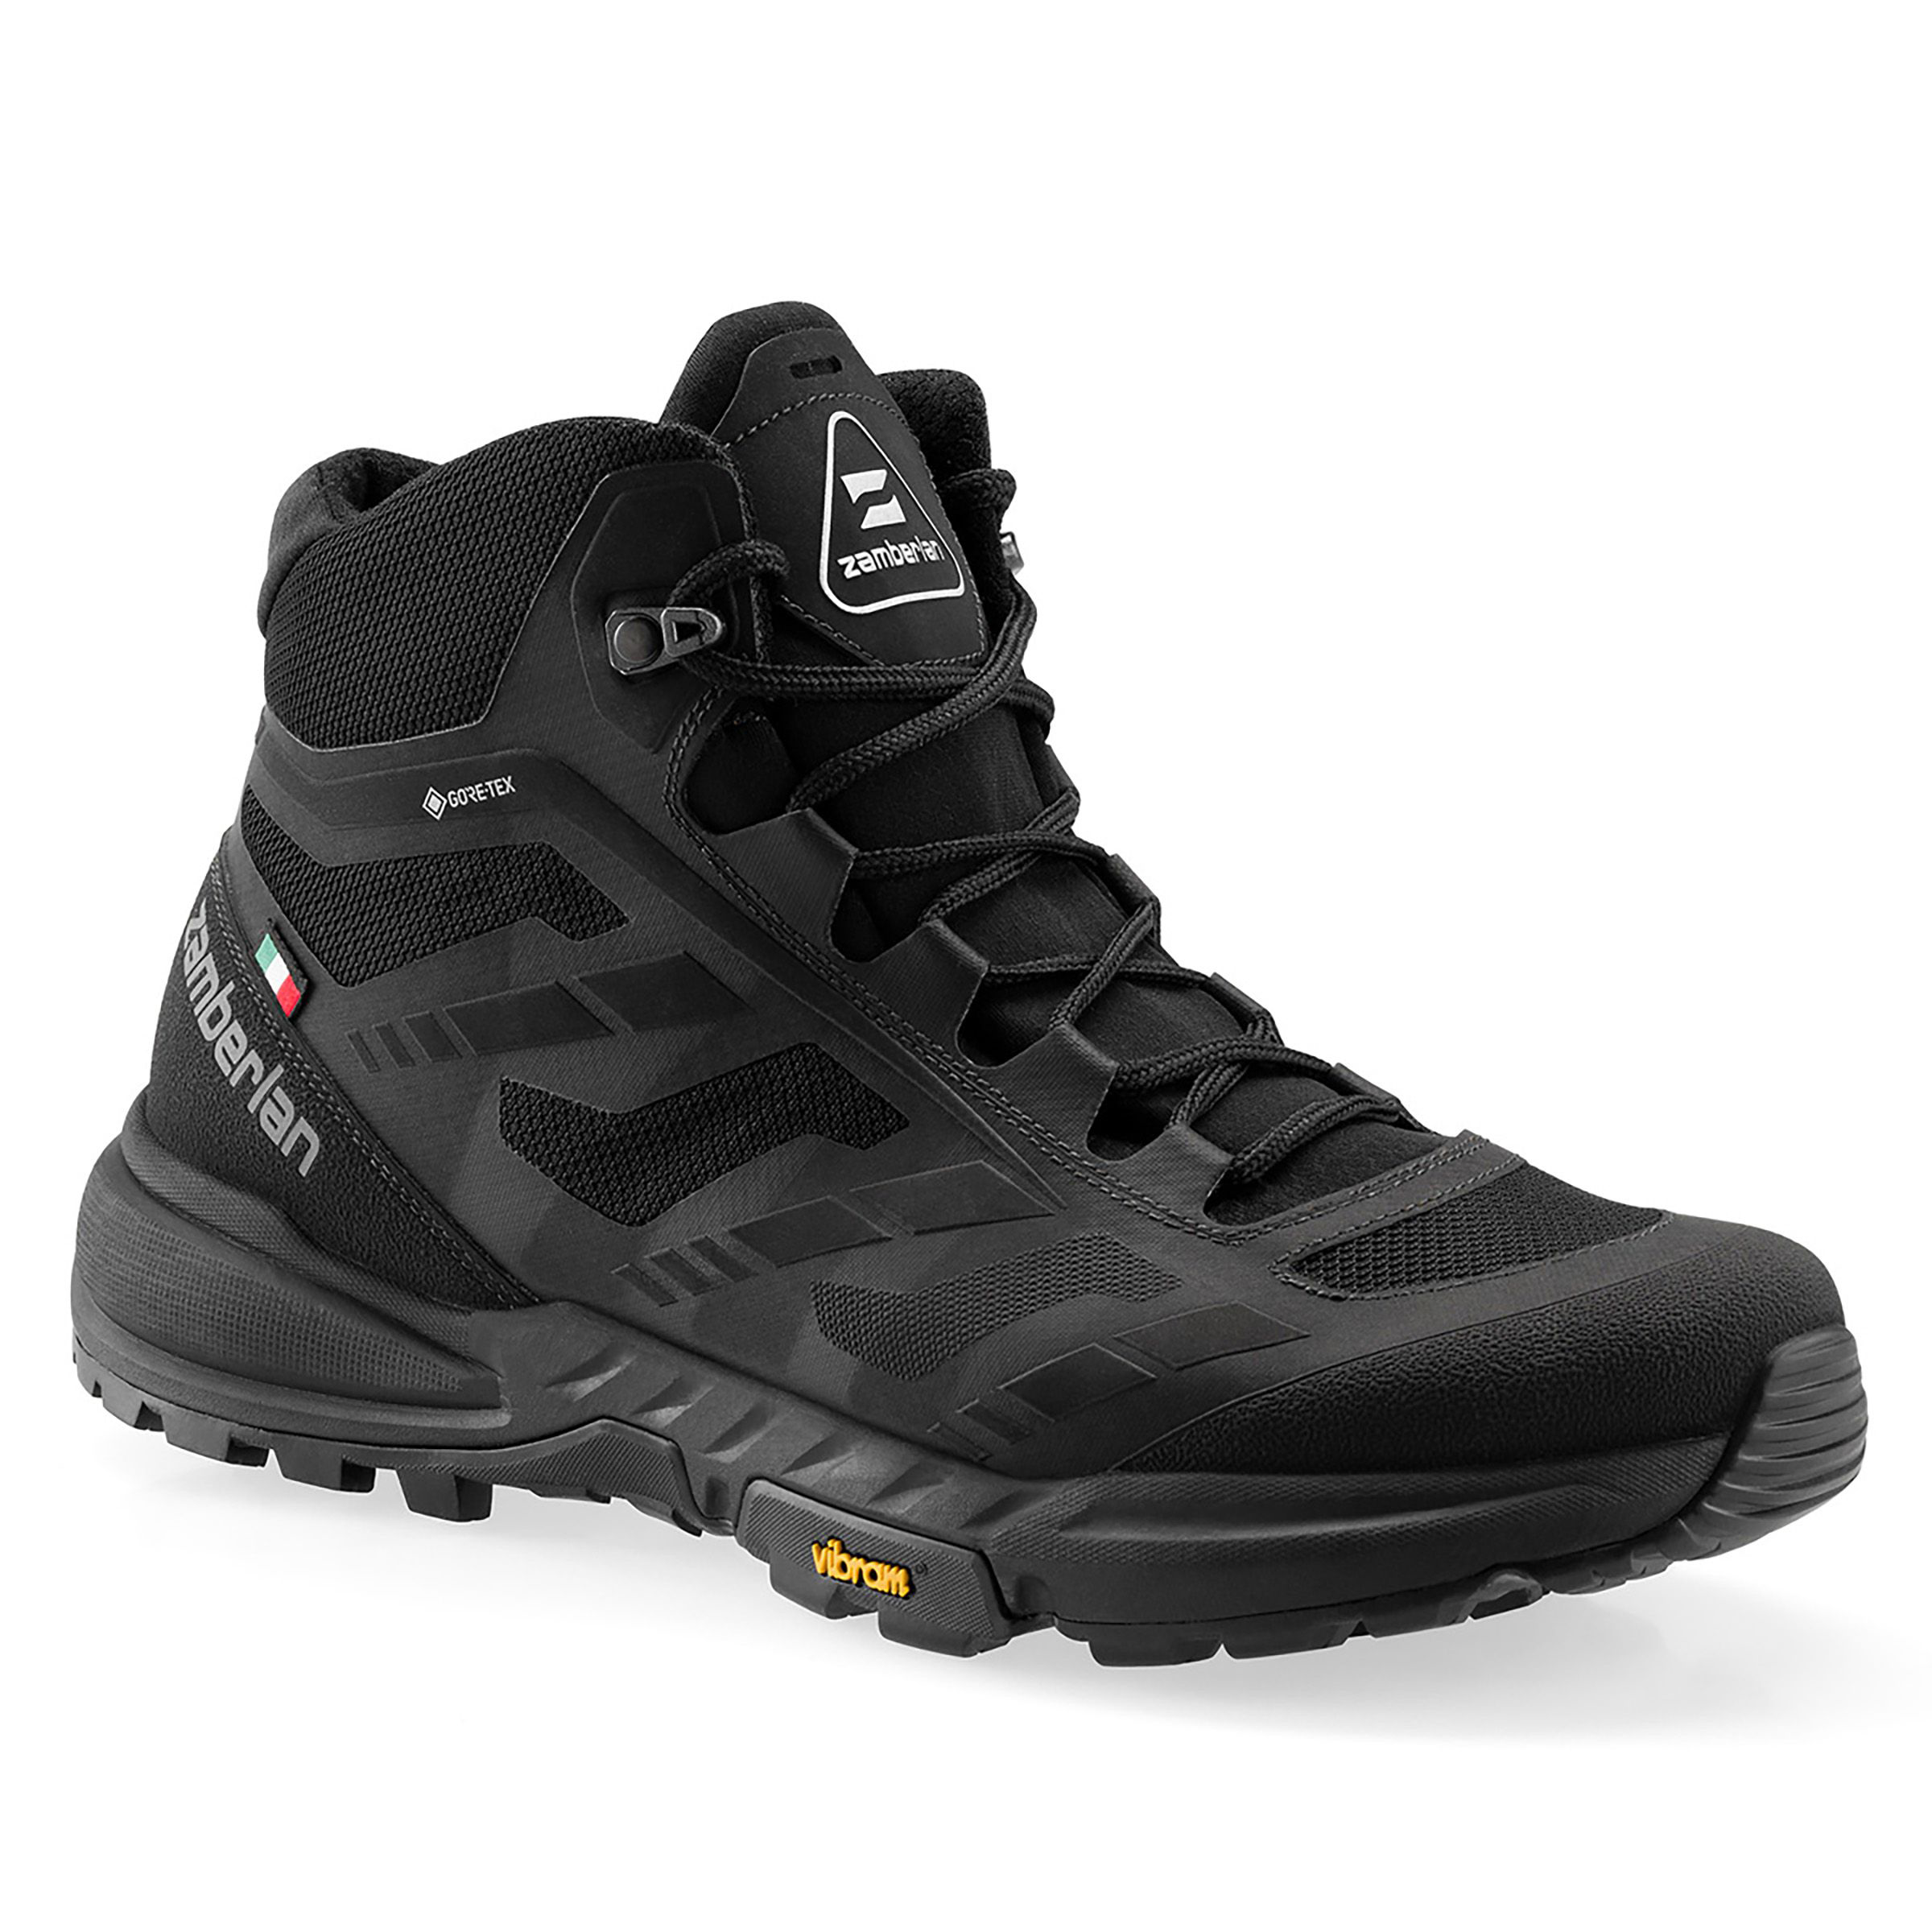 Zamberlan 219 Anabasis GTX Waterproof Mid Hiking Boots for Men - Black - 7.5M